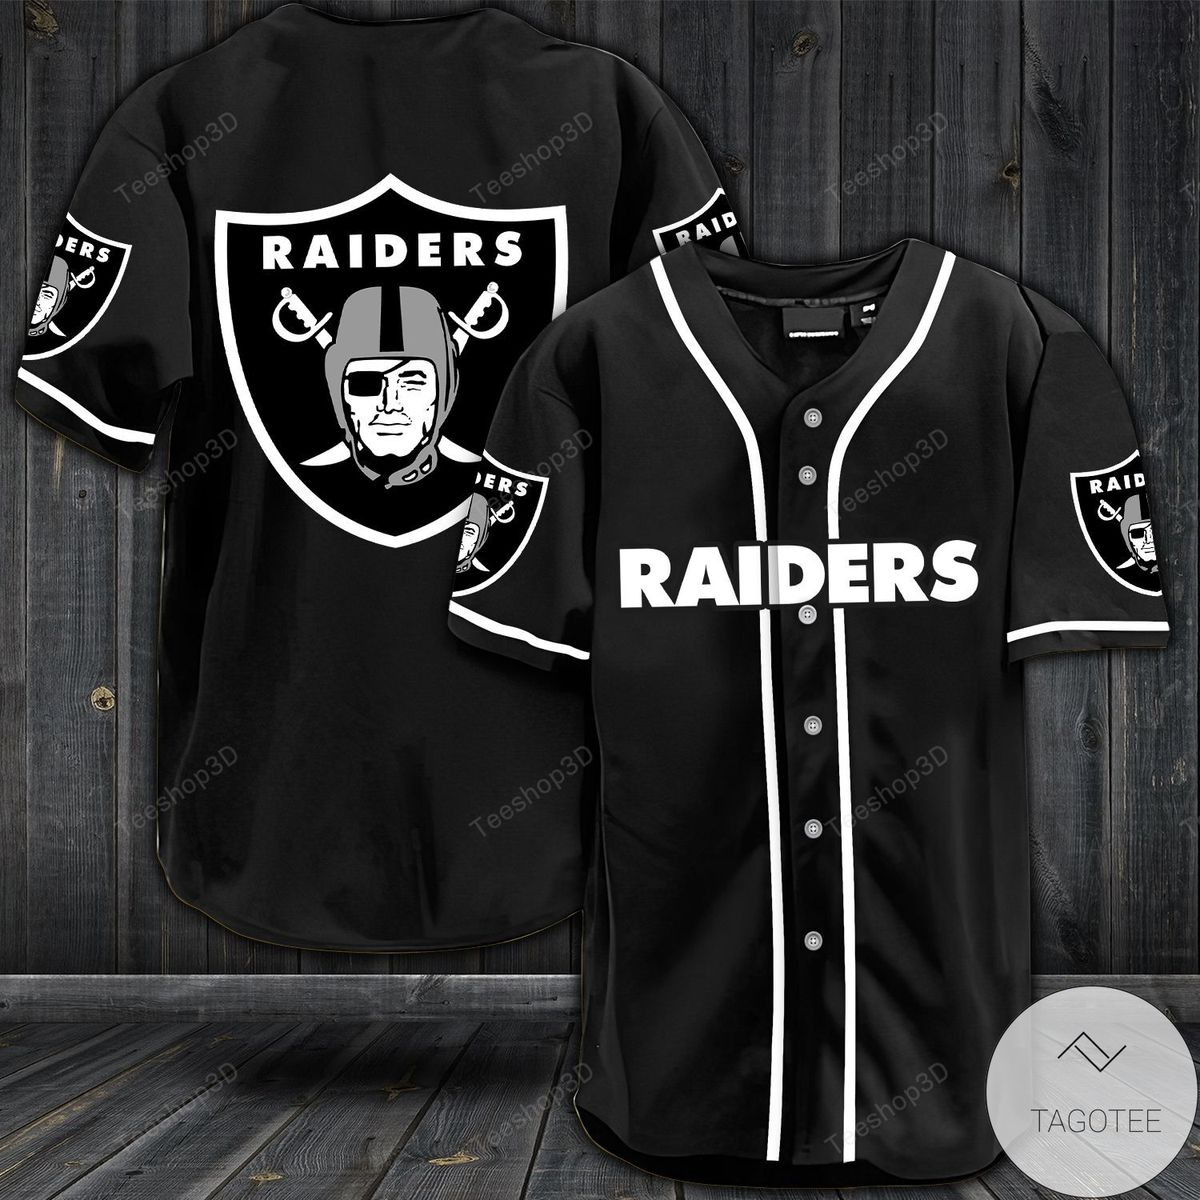 Raiders Black Baseball Jersey